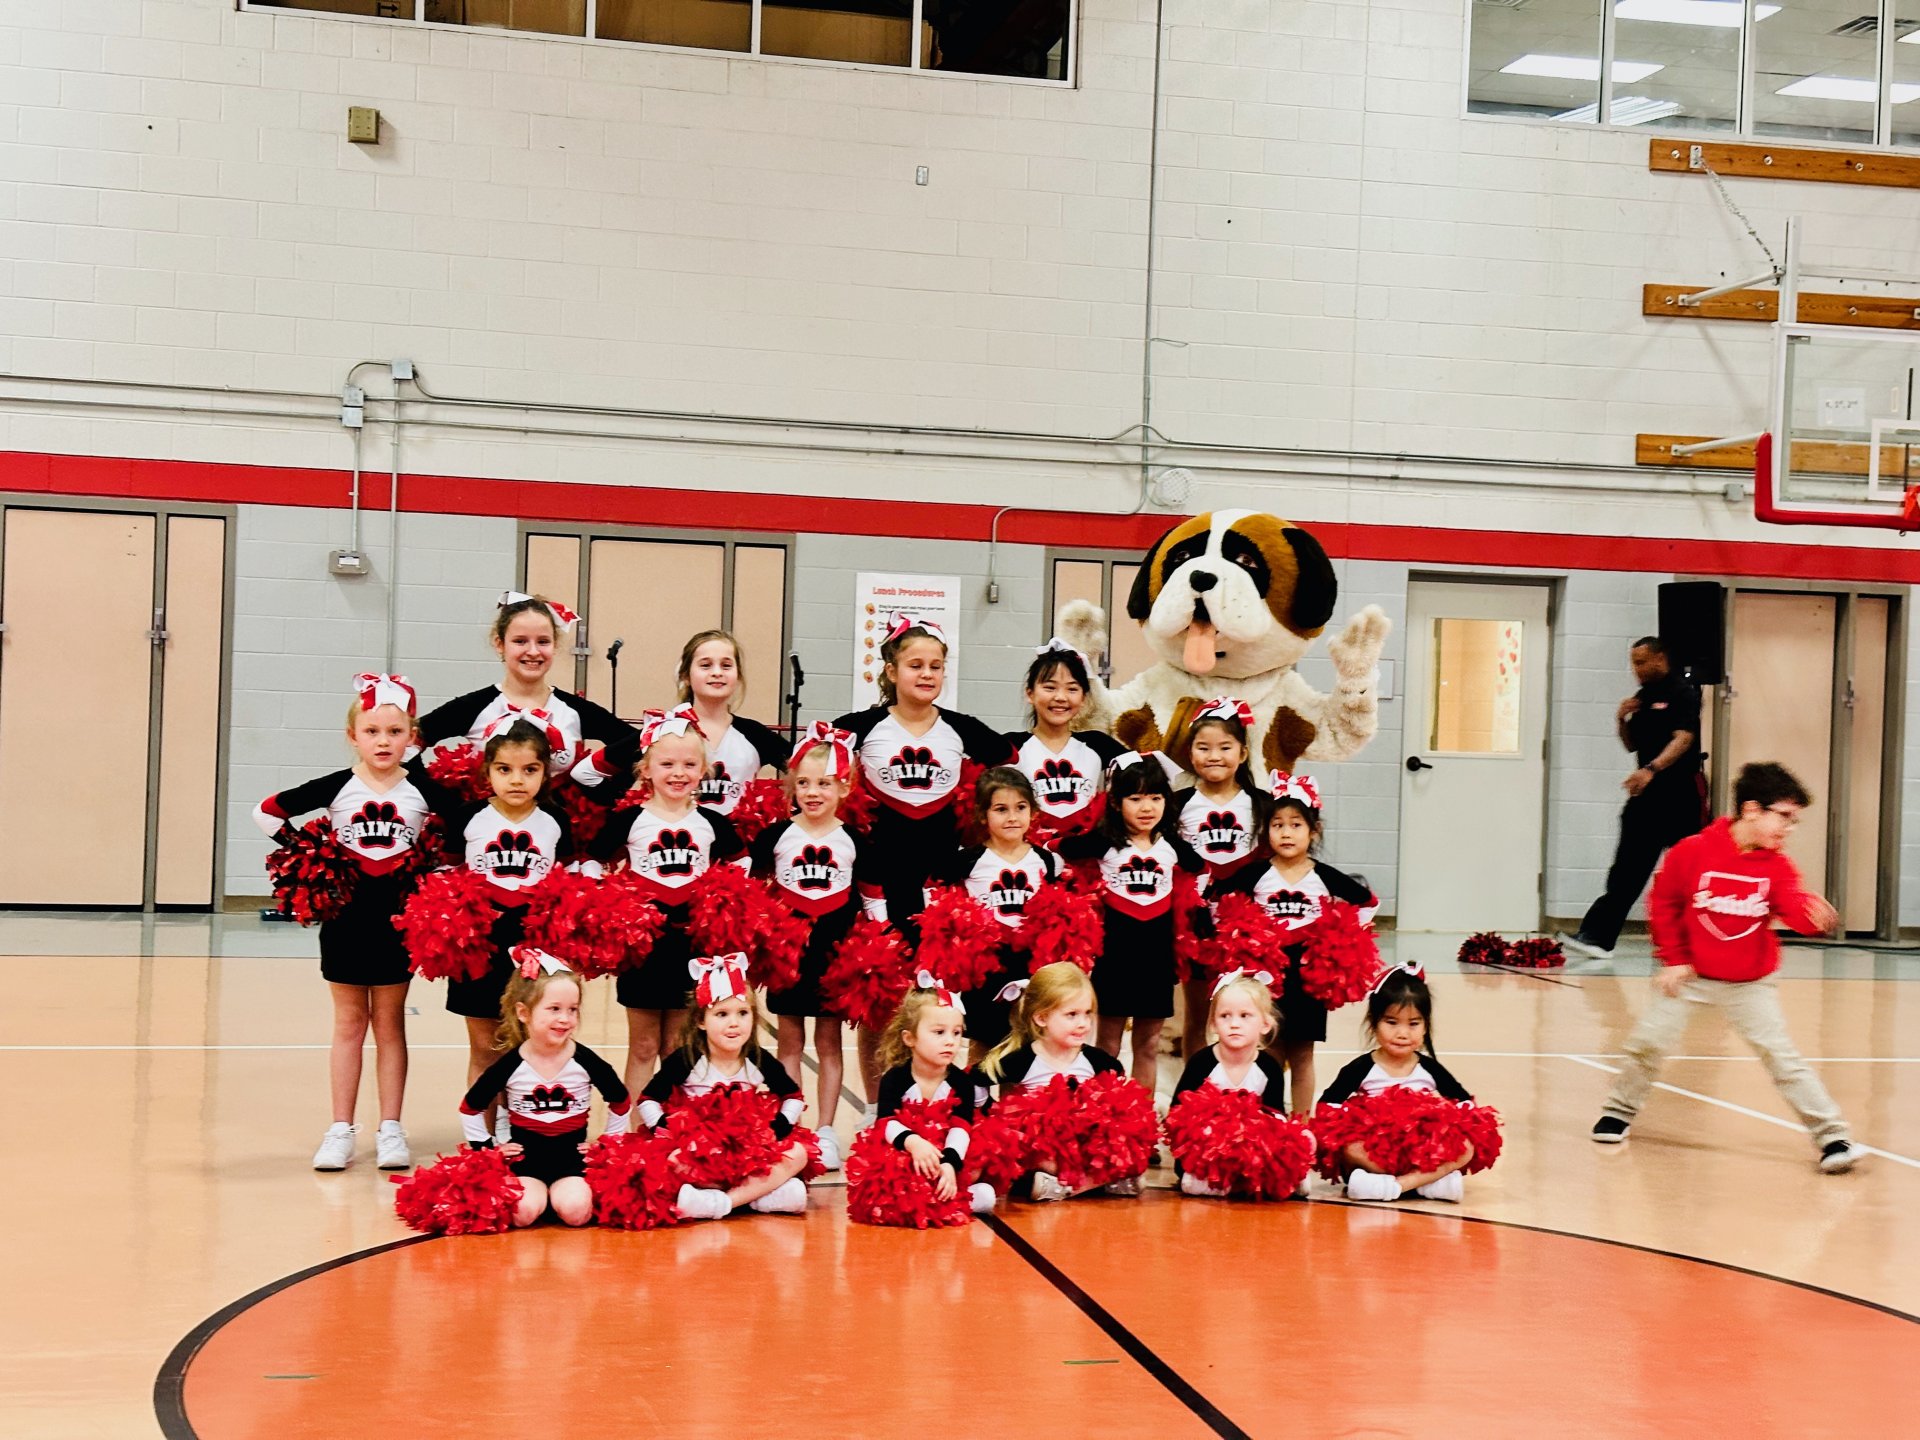 Group photo of school cheerleaders and mascot 